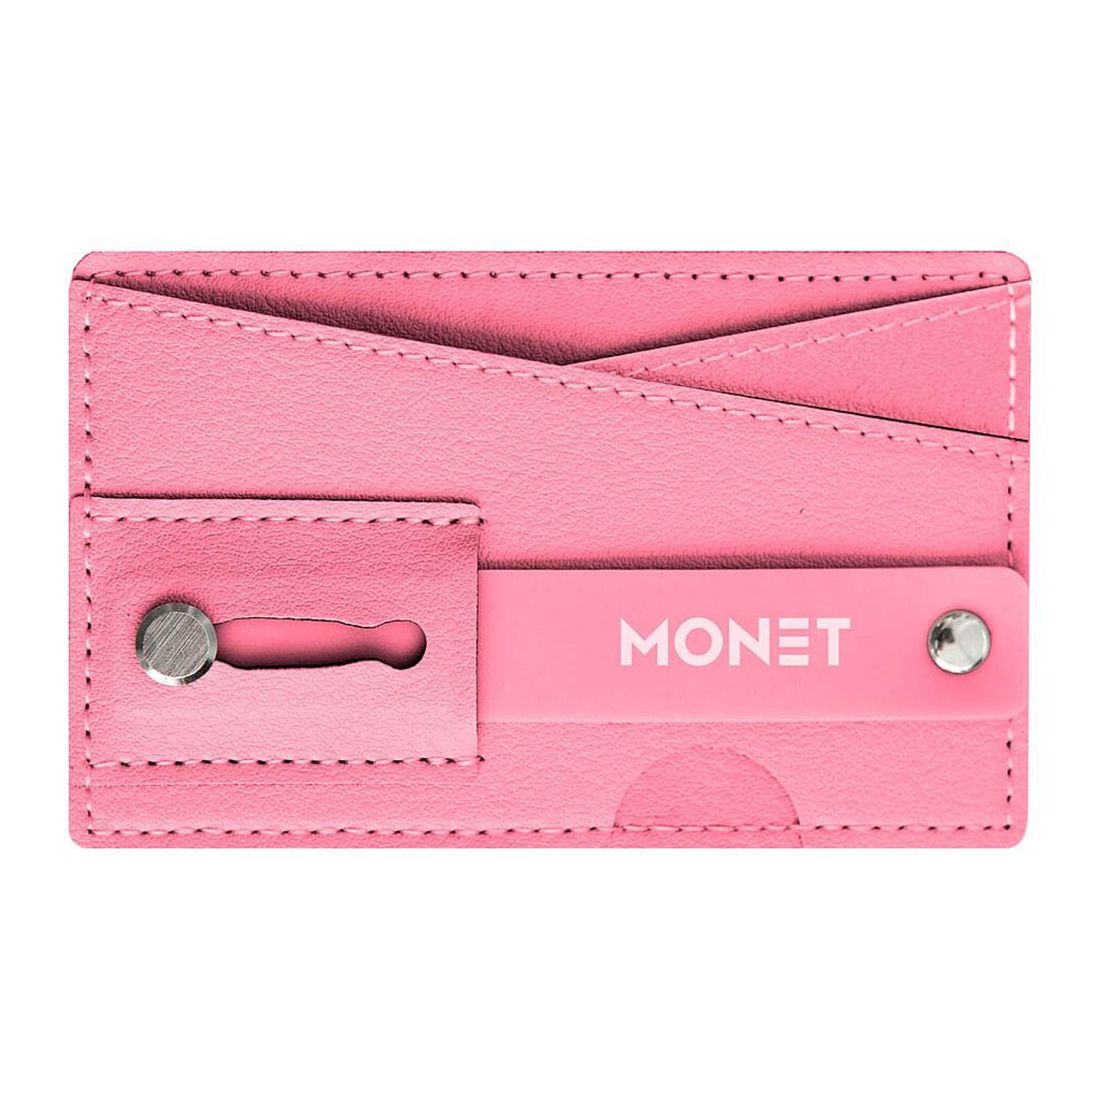 Monet Phone Wallet Light Pink Black Pack